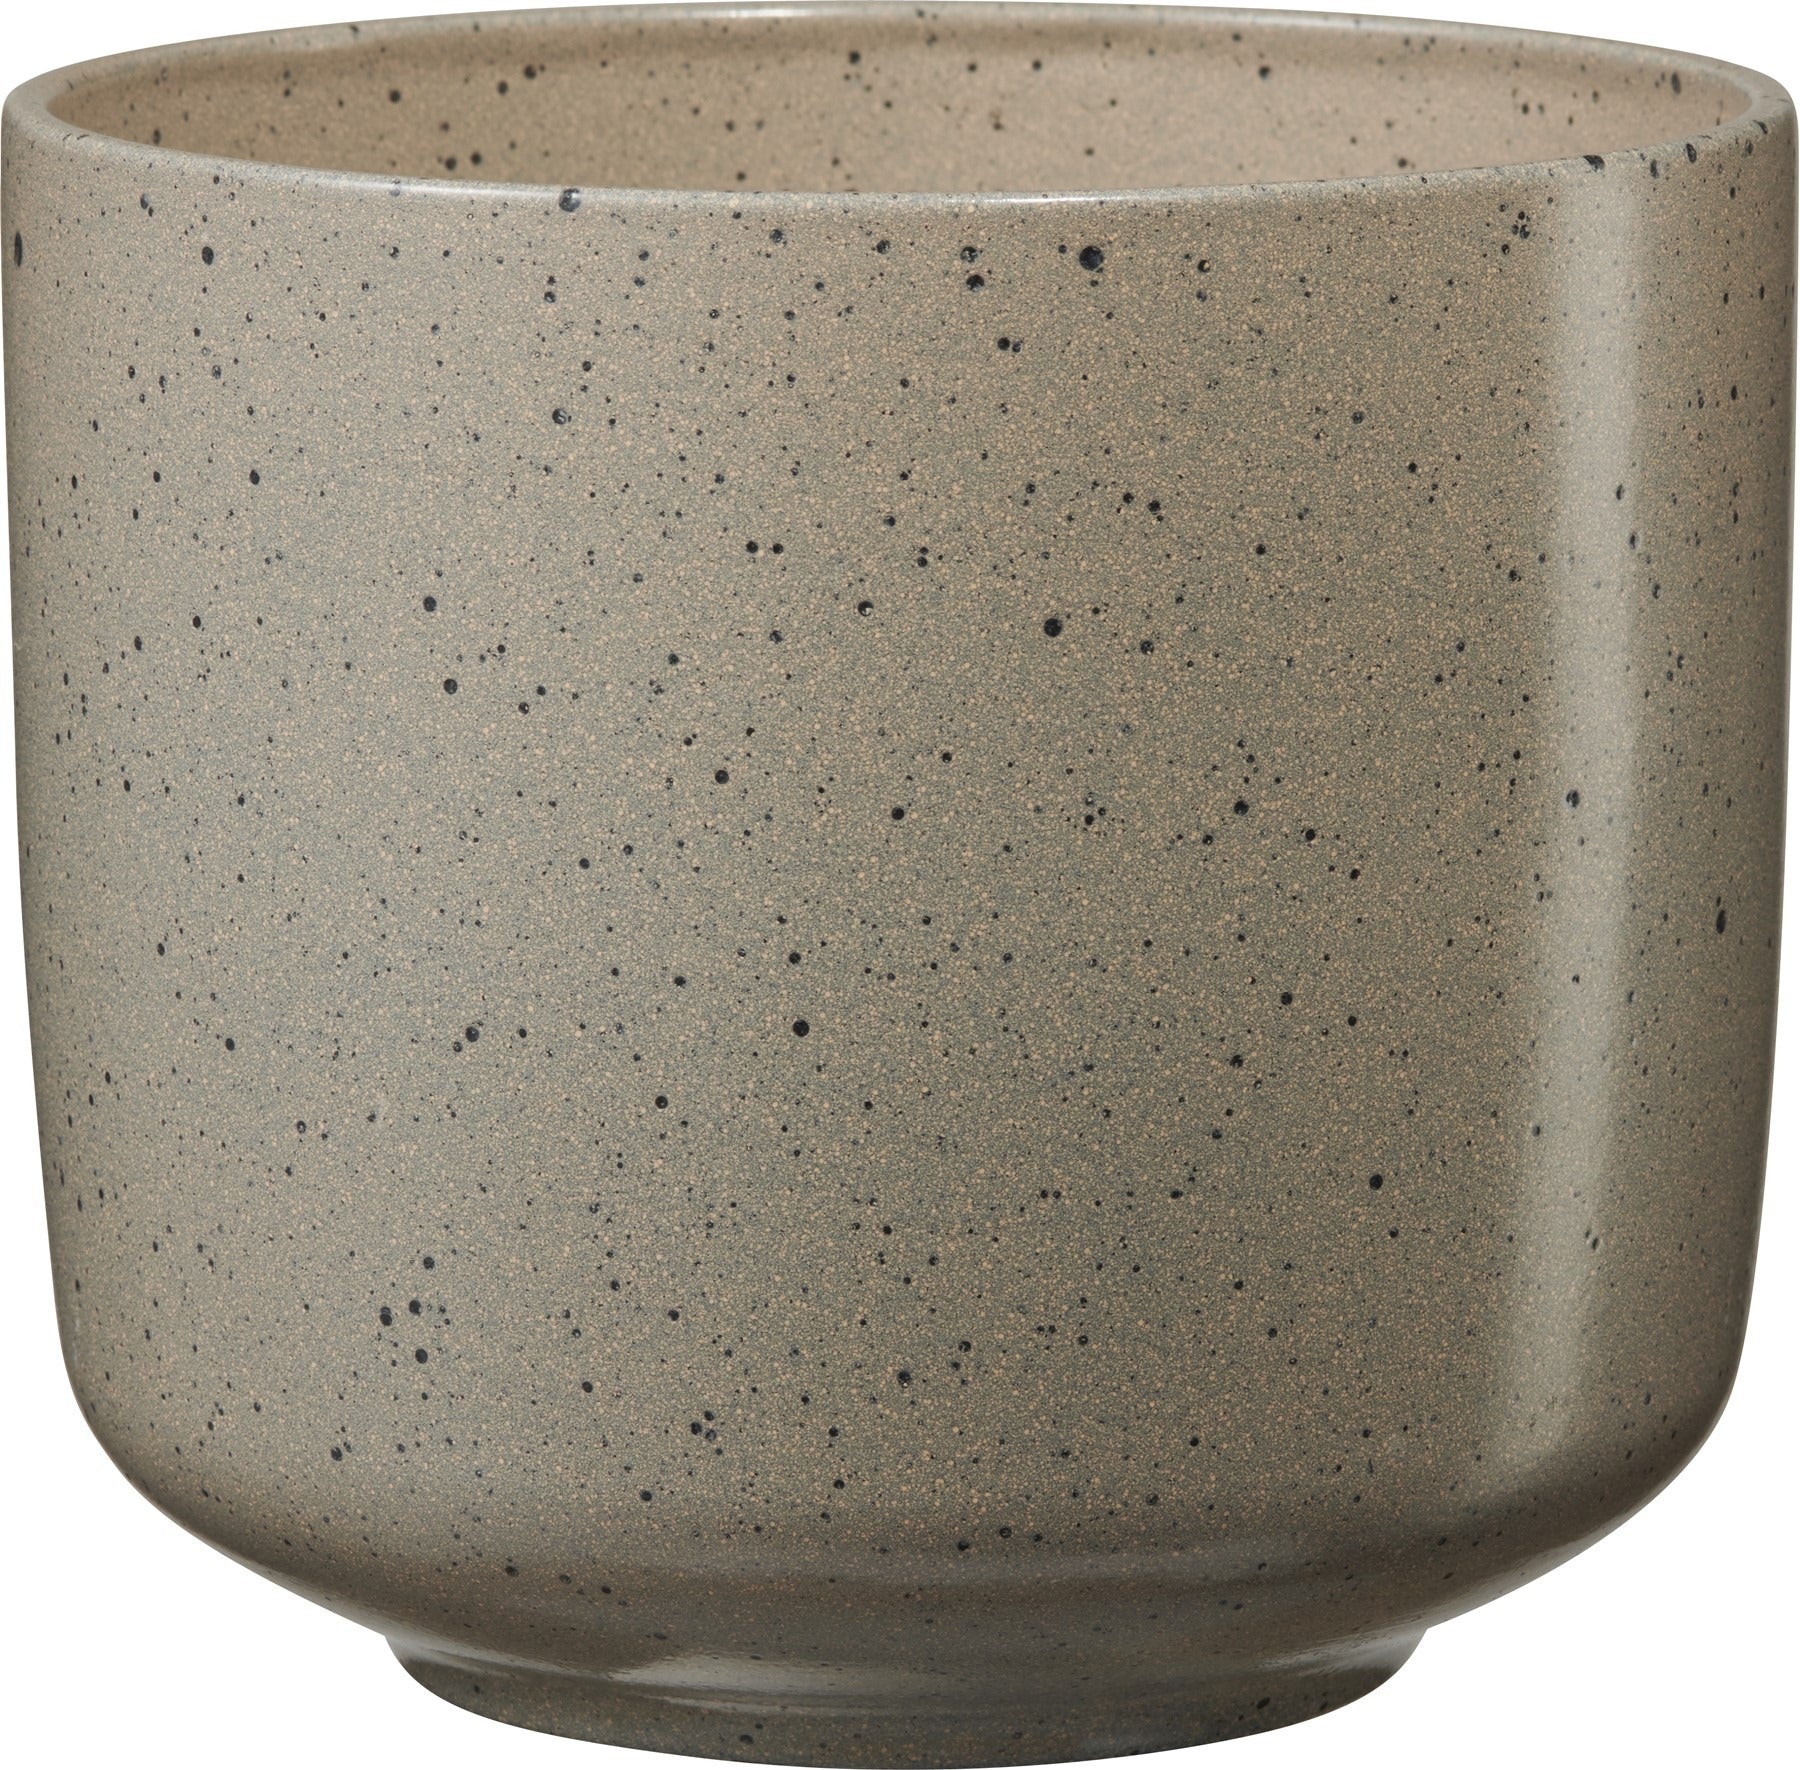 View Bari Ceramic Pot Brown Effect 13 x 12cm information